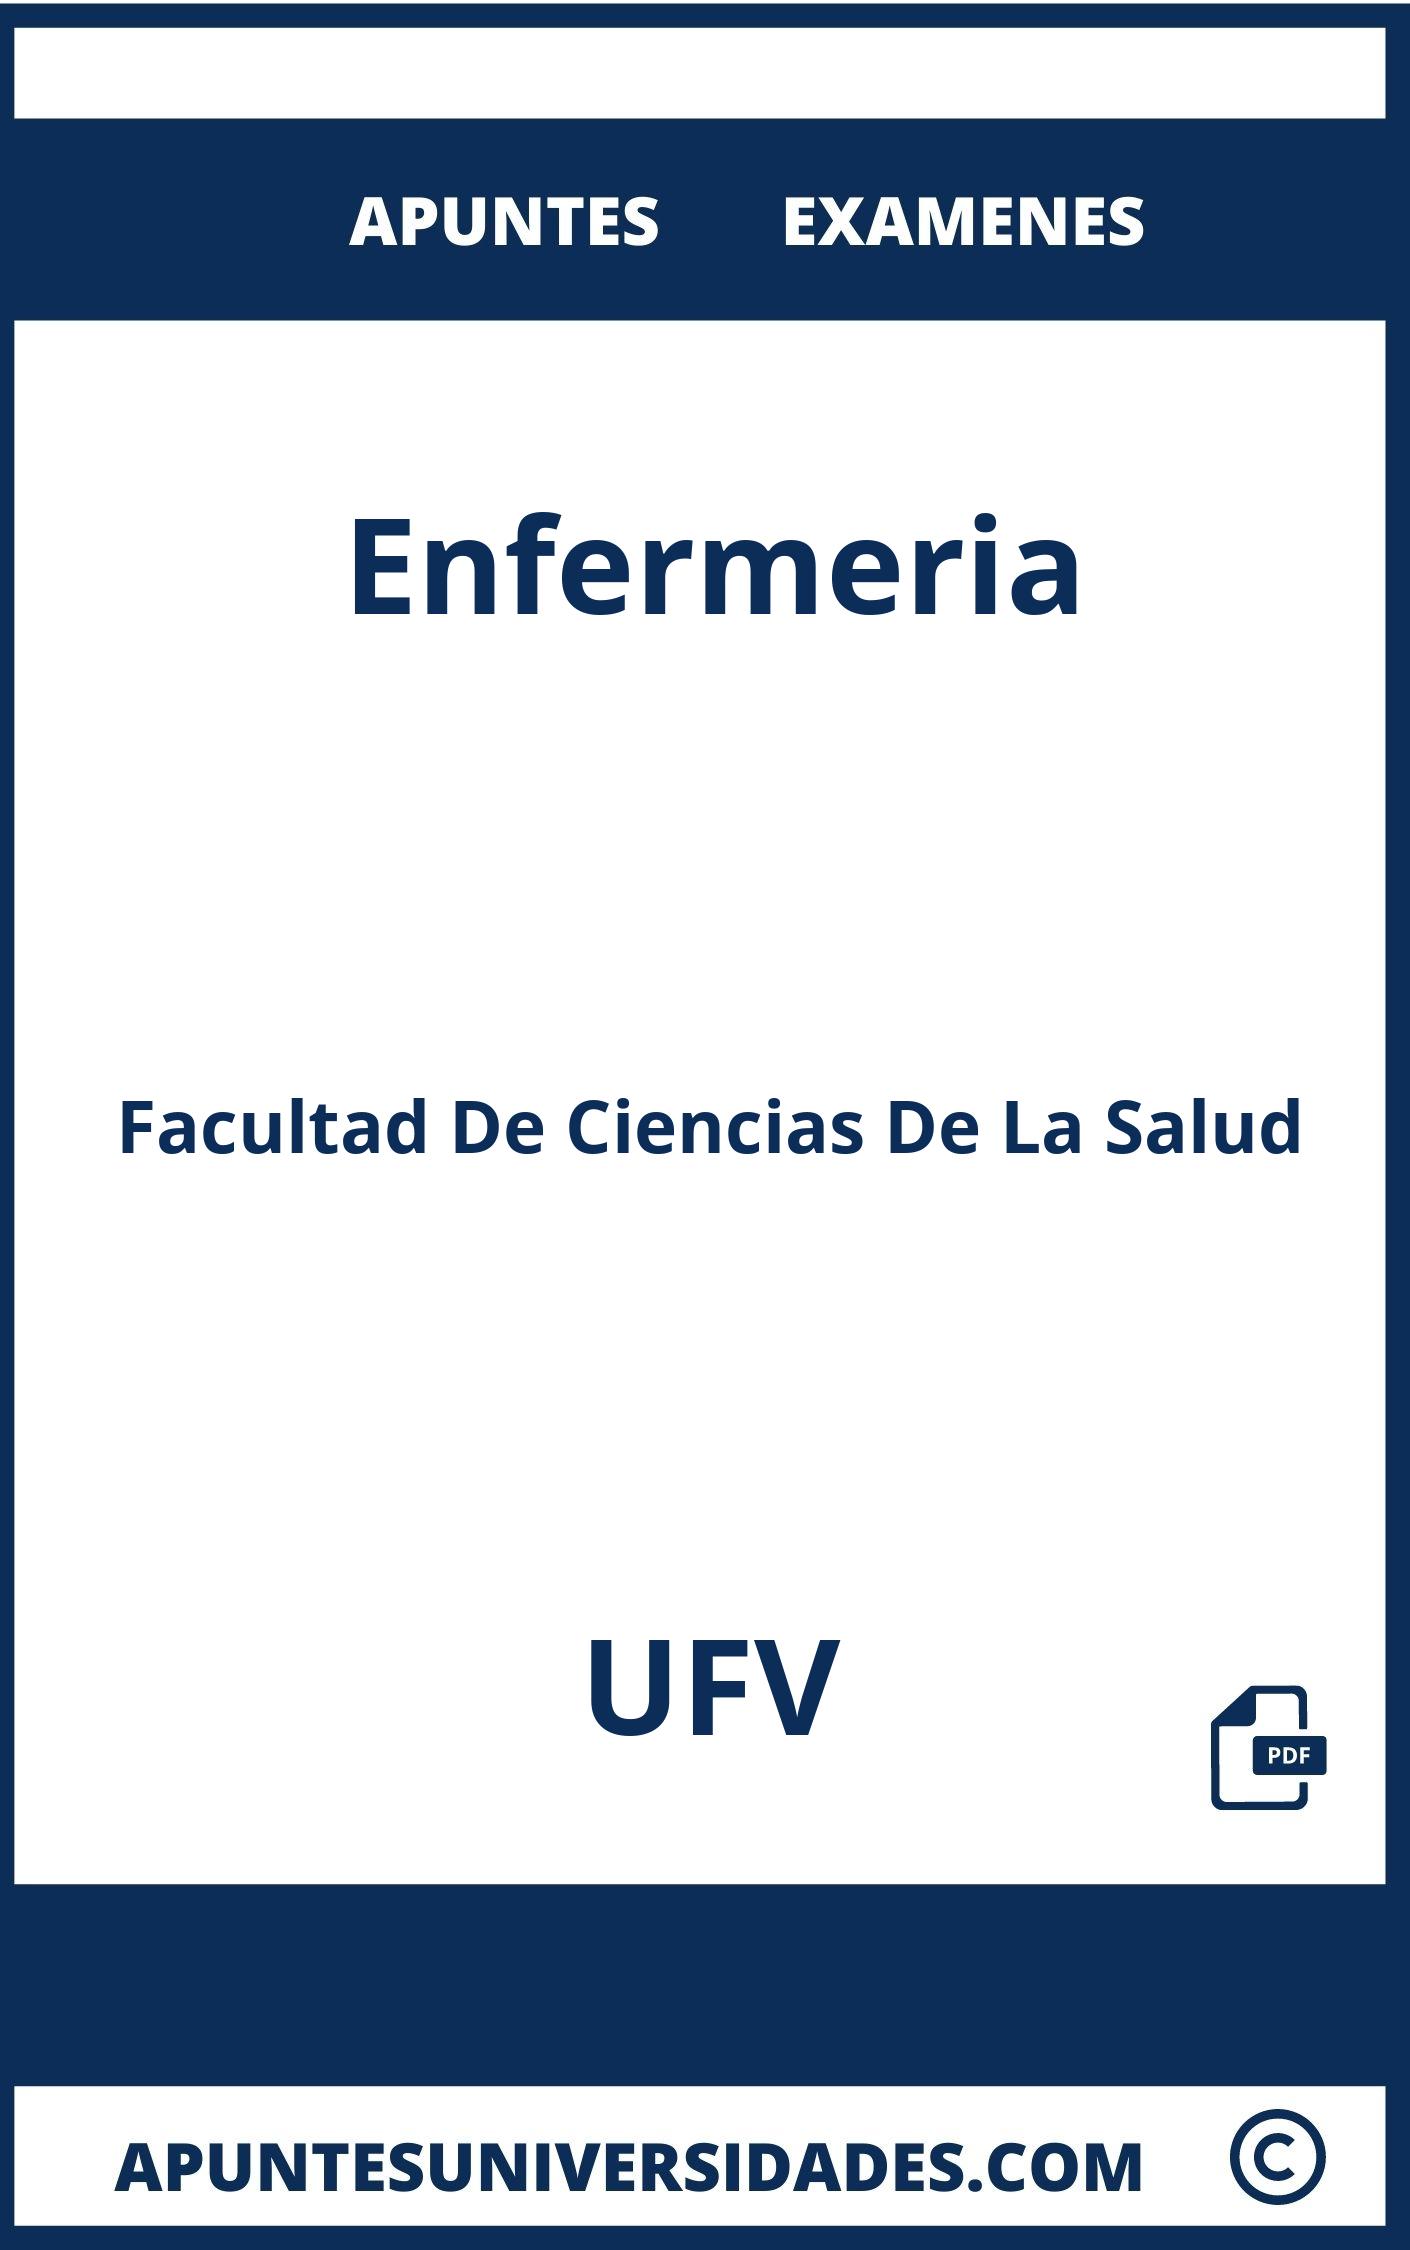 Enfermeria UFV Apuntes Examenes